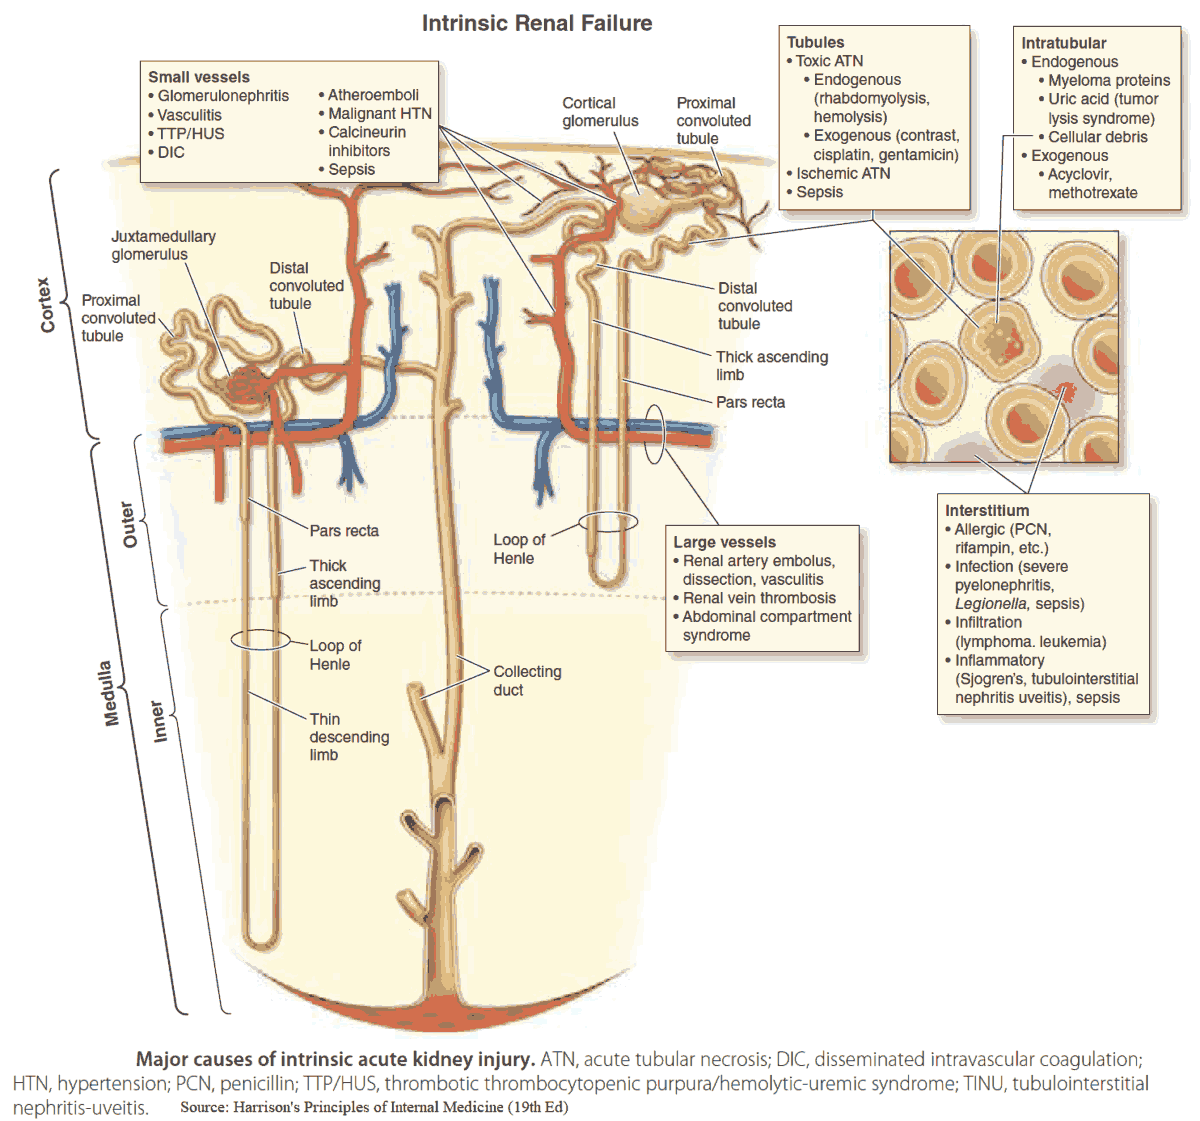 Major causes of intrinsic acute kidney injury (AKI)